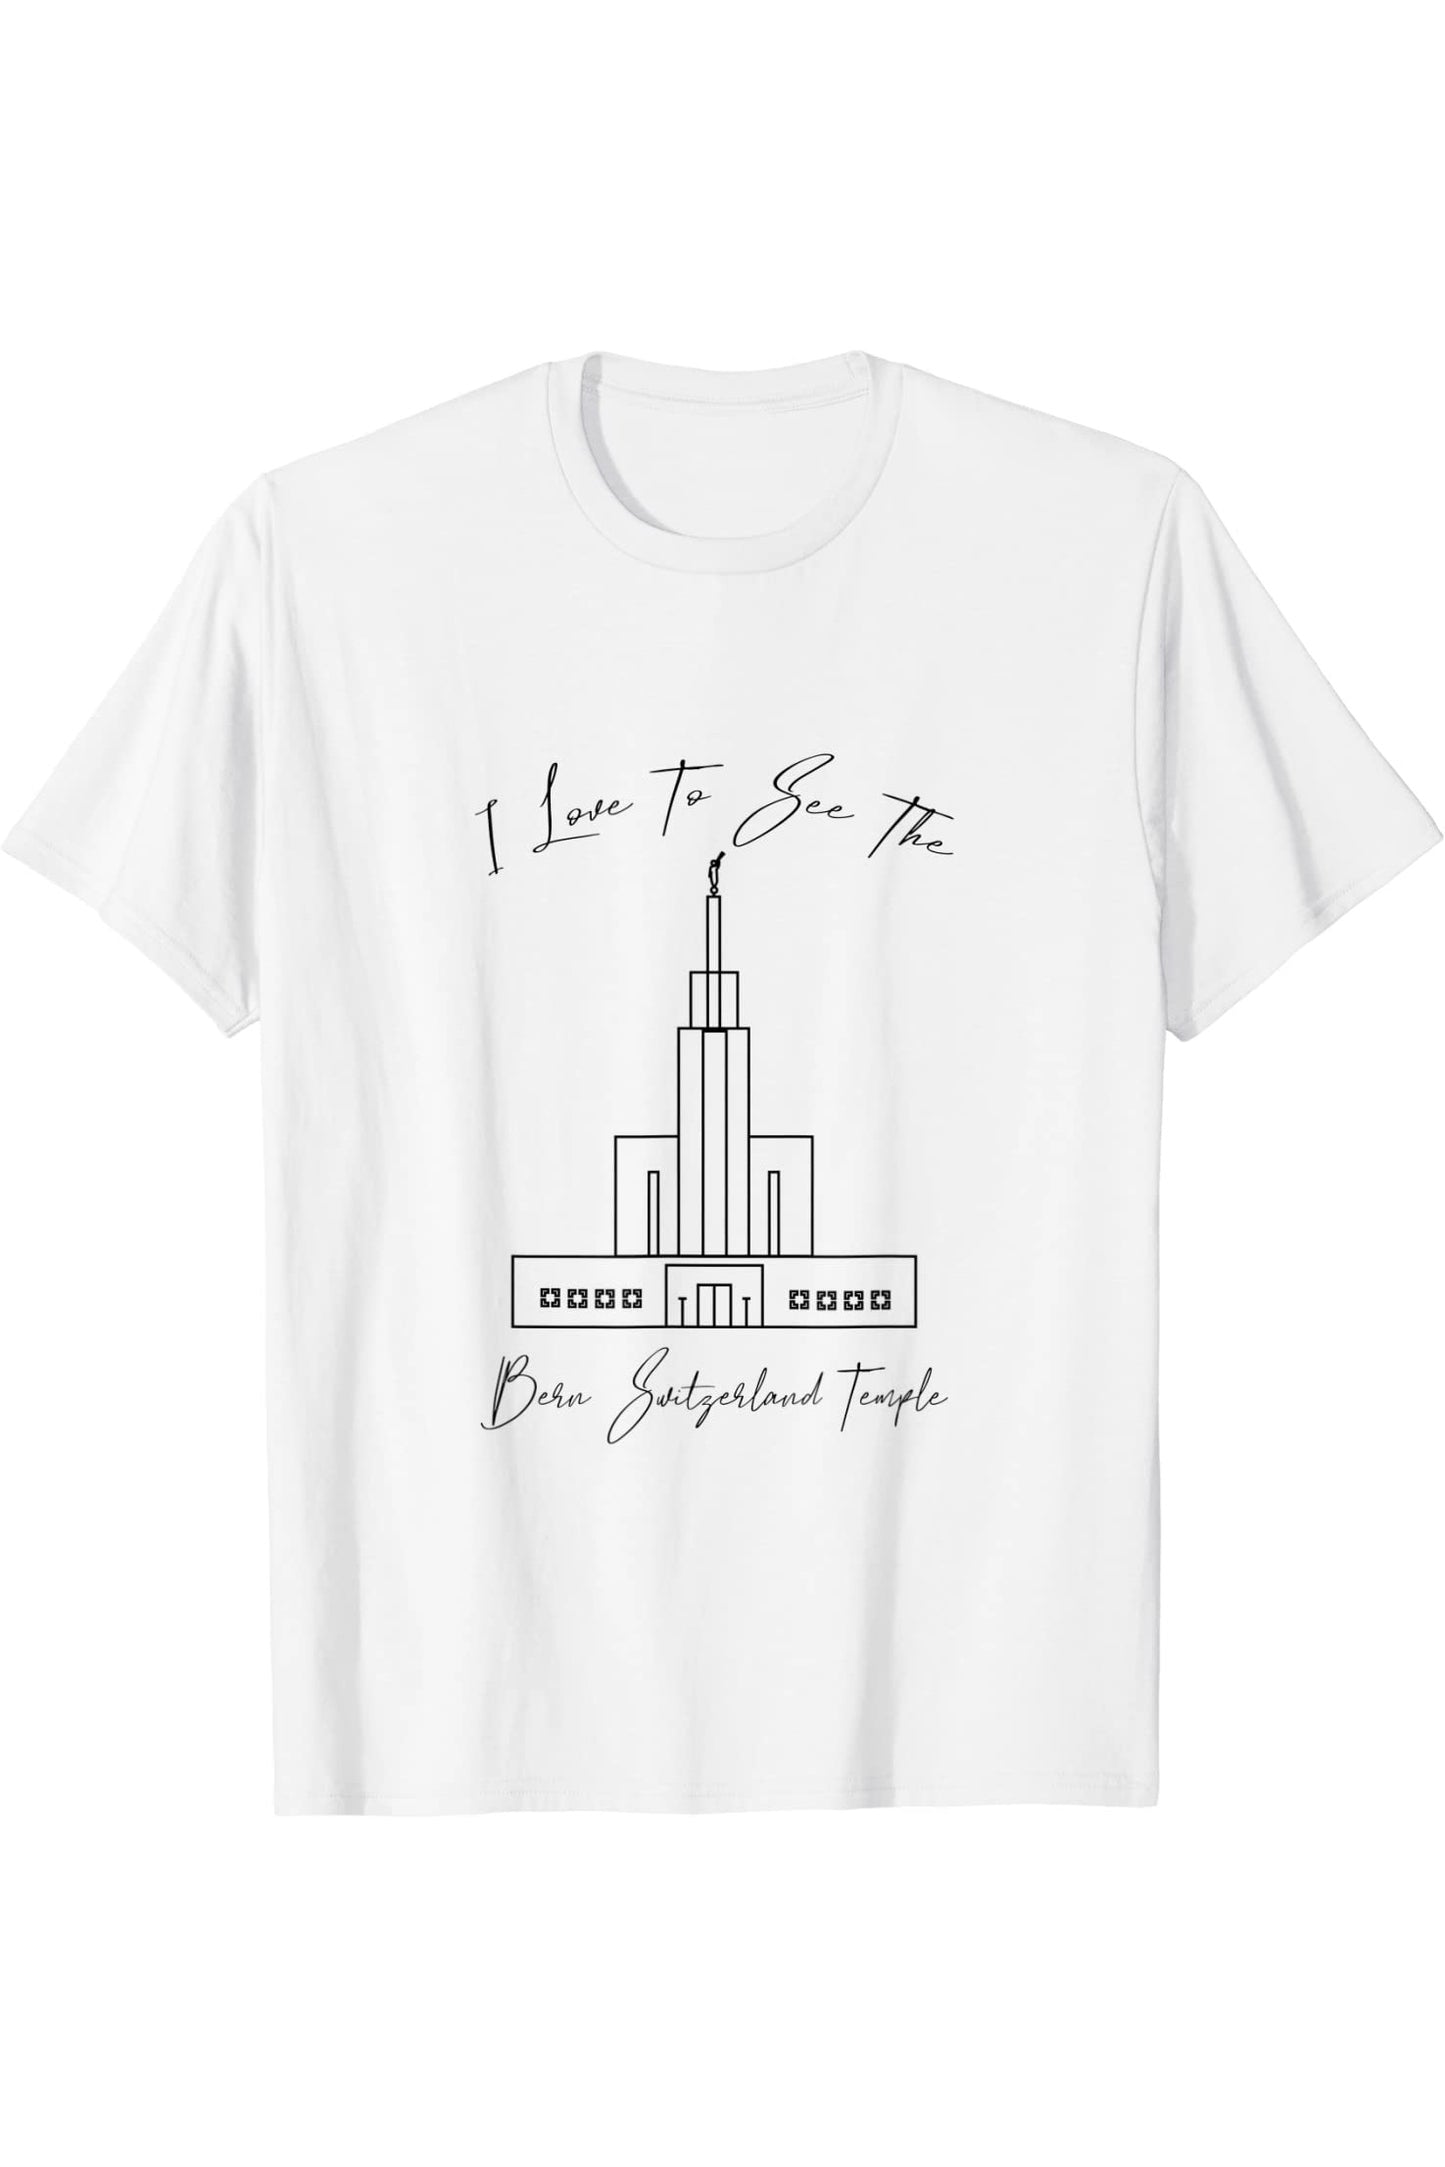 Bern Switzerland Temple T-Shirt - Calligraphy Style (English) US